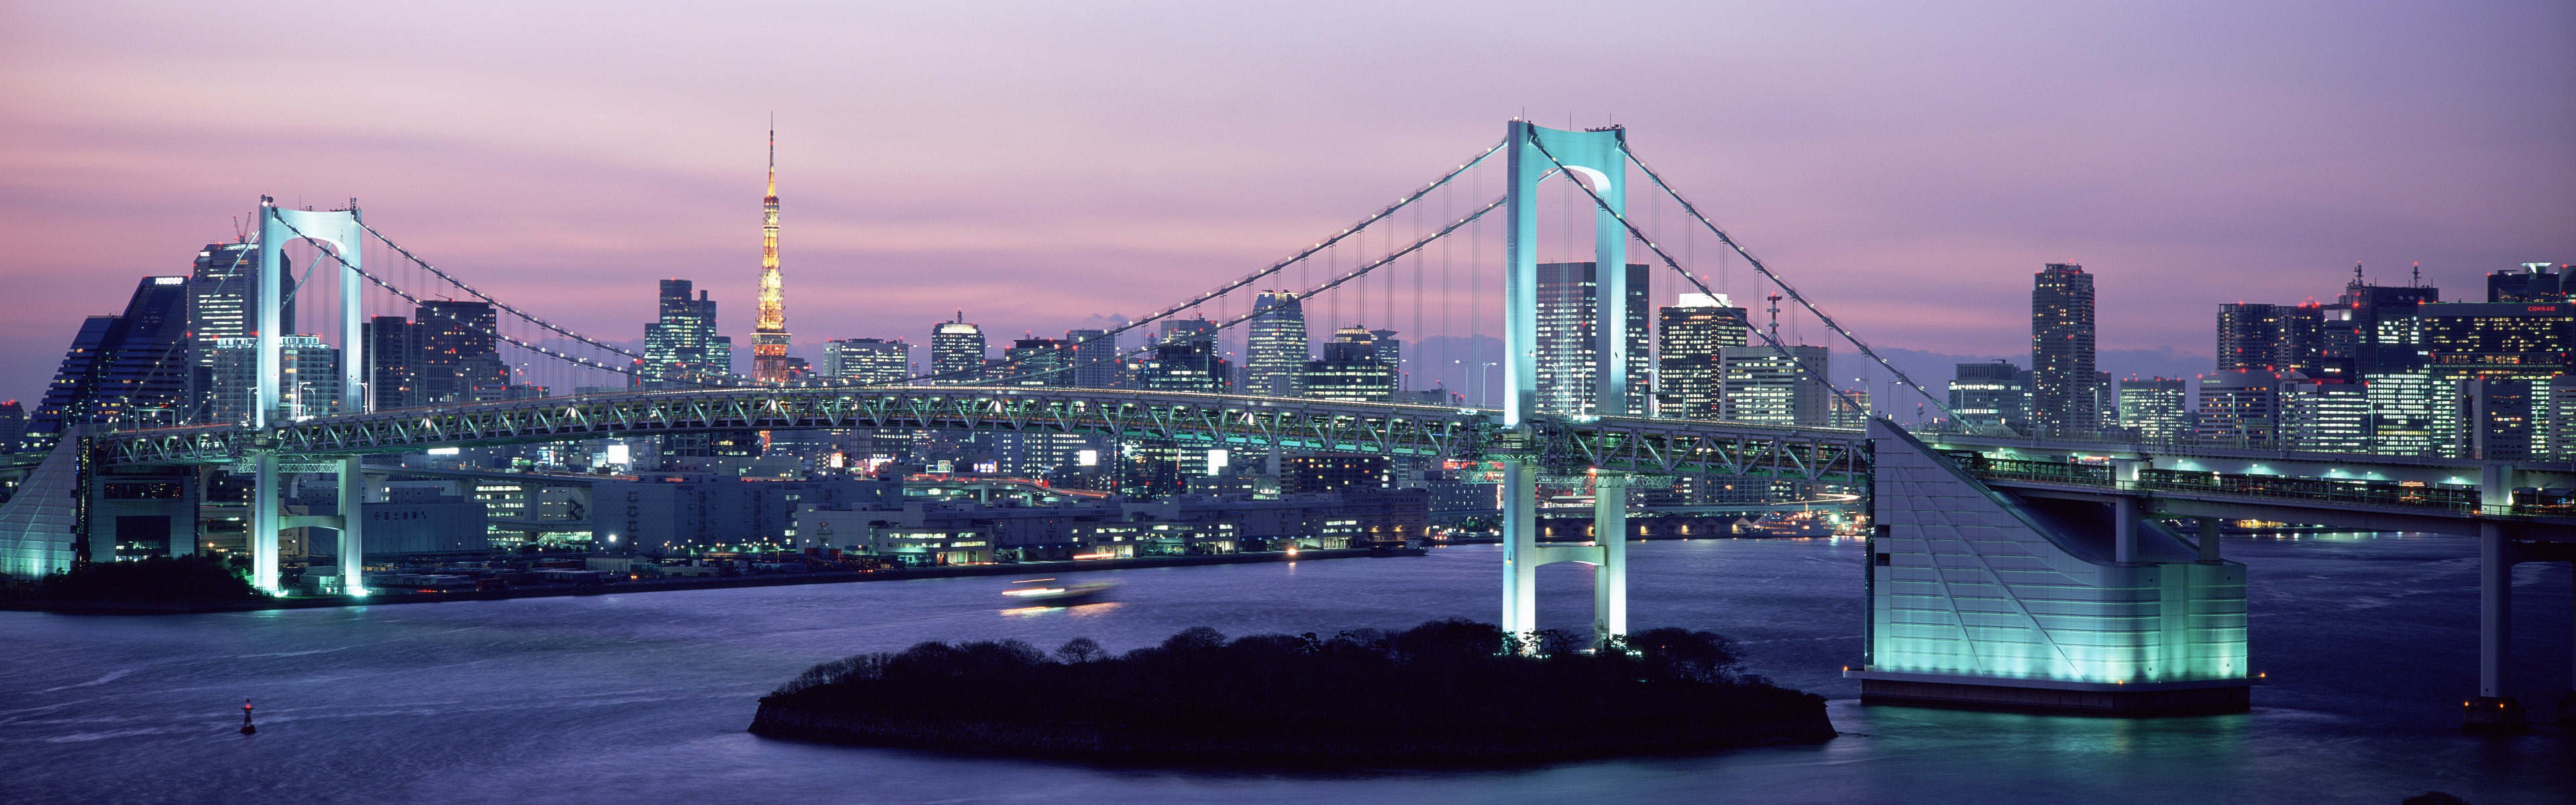 Windows 8 official panoramic wallpaper, cityscapes, Bridge, Horizon #5 - 3840x1200